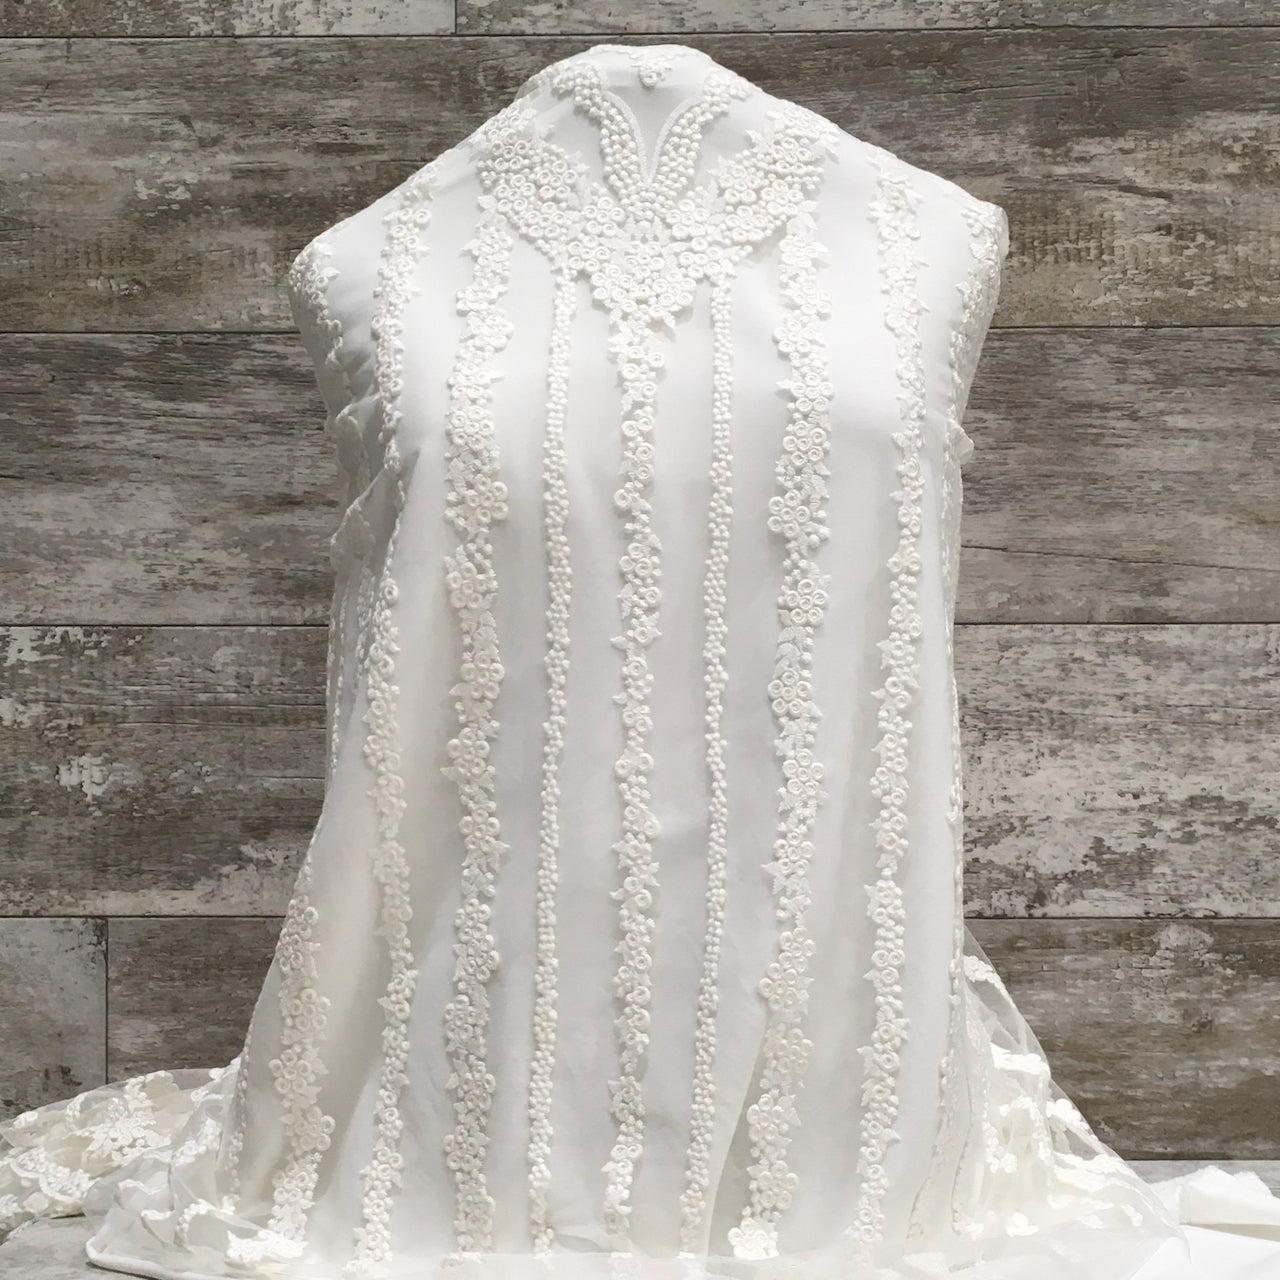 Bridal Lace Chevron Stripe Design - Sold by the half yard